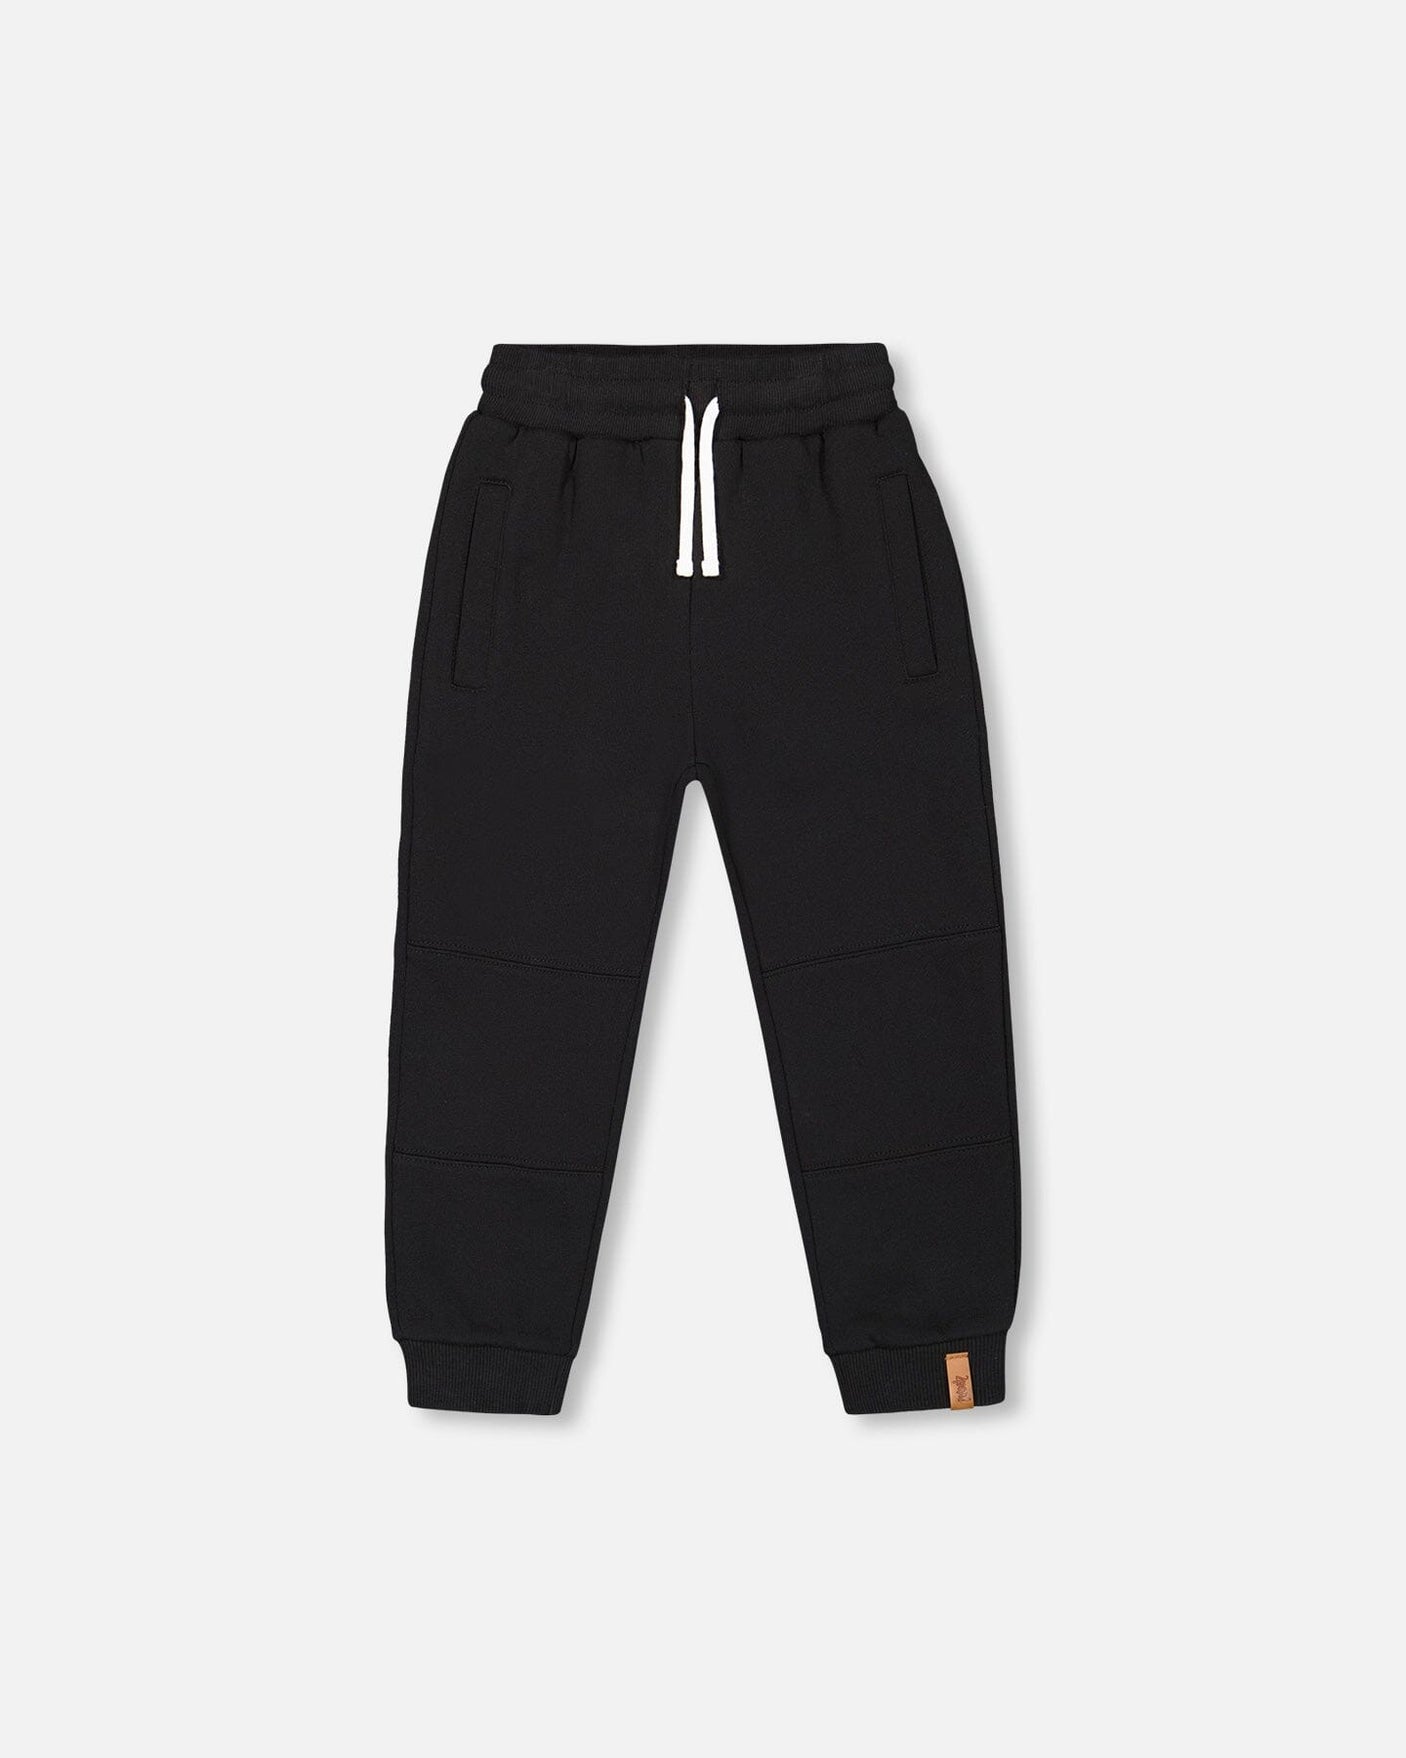 Fleece Sweatpants With Pockets Black-0